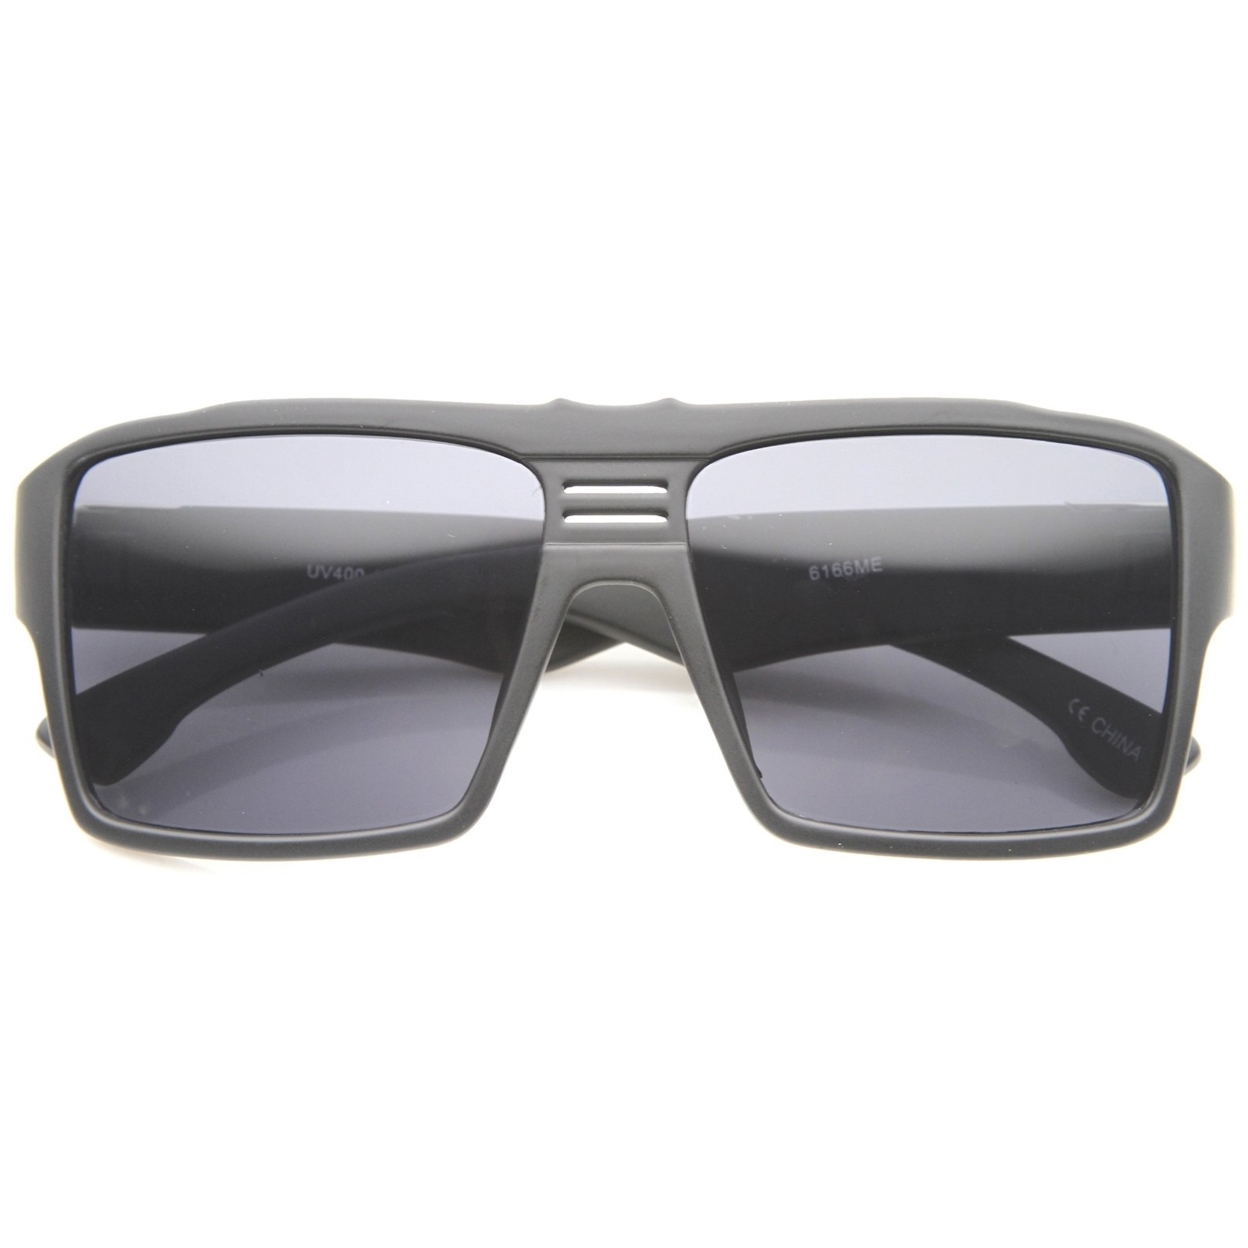 Men's Modern Casual Flat Top Wide Temple Rectangle Aviator Sunglasses 57mm - Shiny Black / Smoke